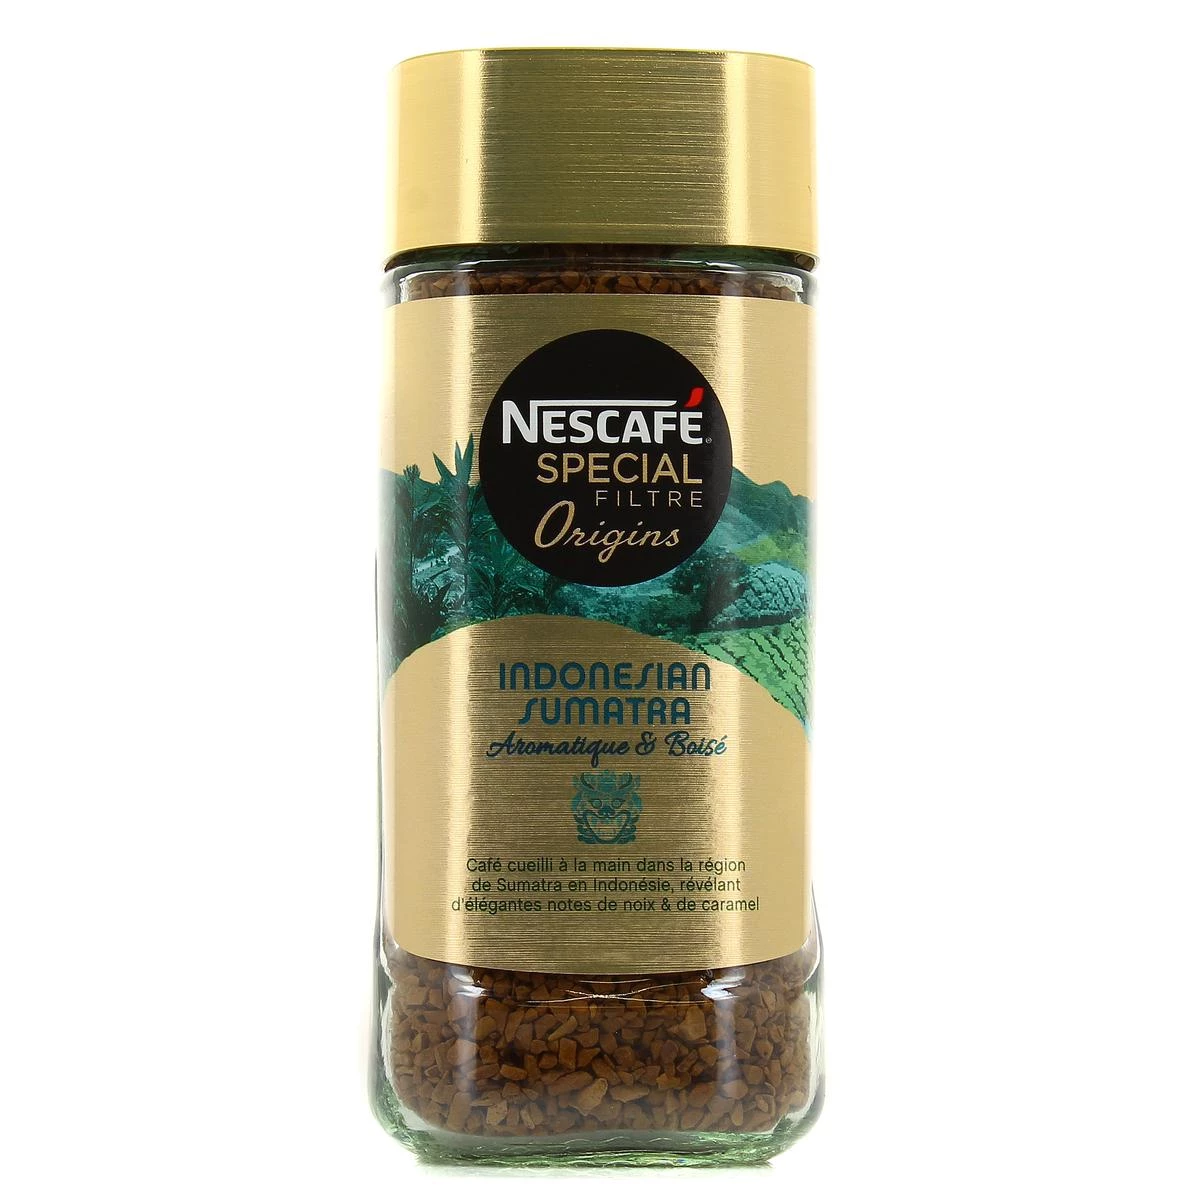 Instantkaffee Spezialfilter Origins Indonesischer Sumatra 95g - NESCAFÉ